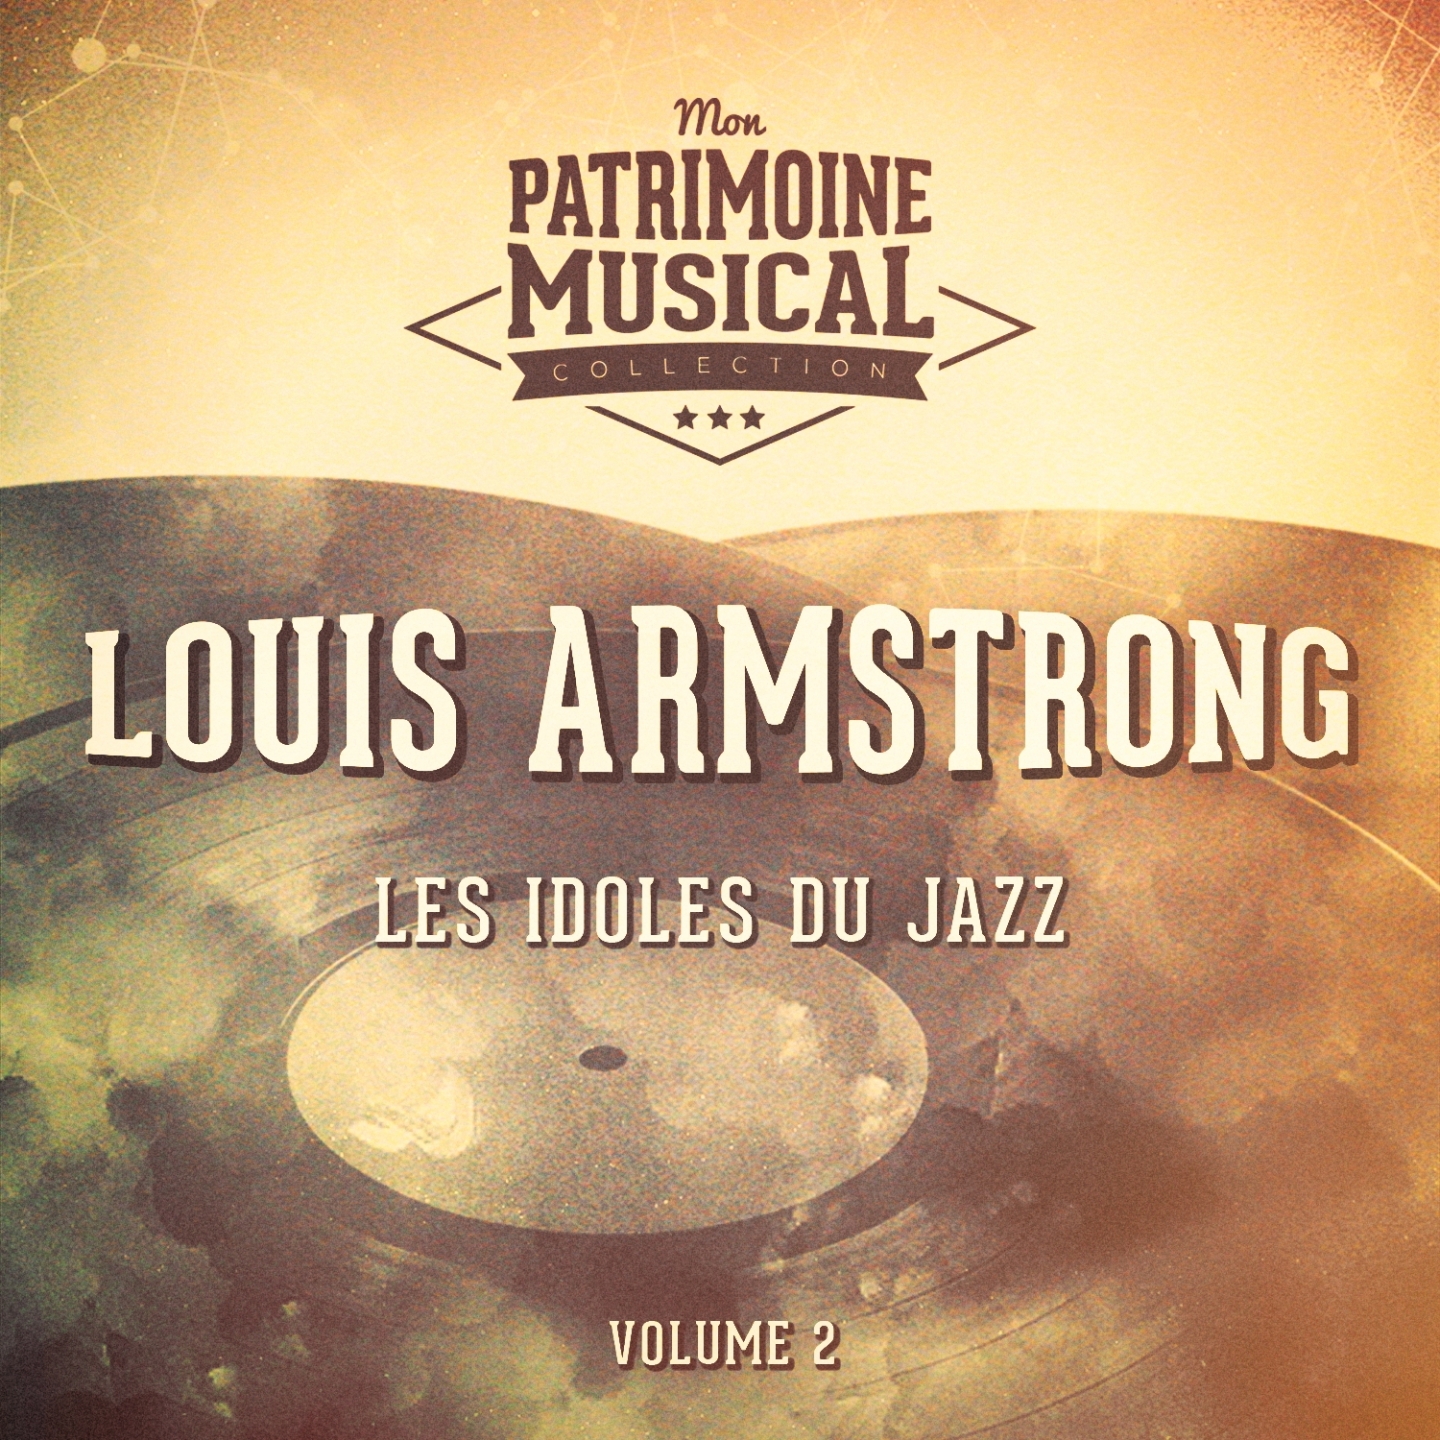 Les idoles du Jazz : Louis Armstrong, Vol. 2 (Armstrong joue Fats Waller)